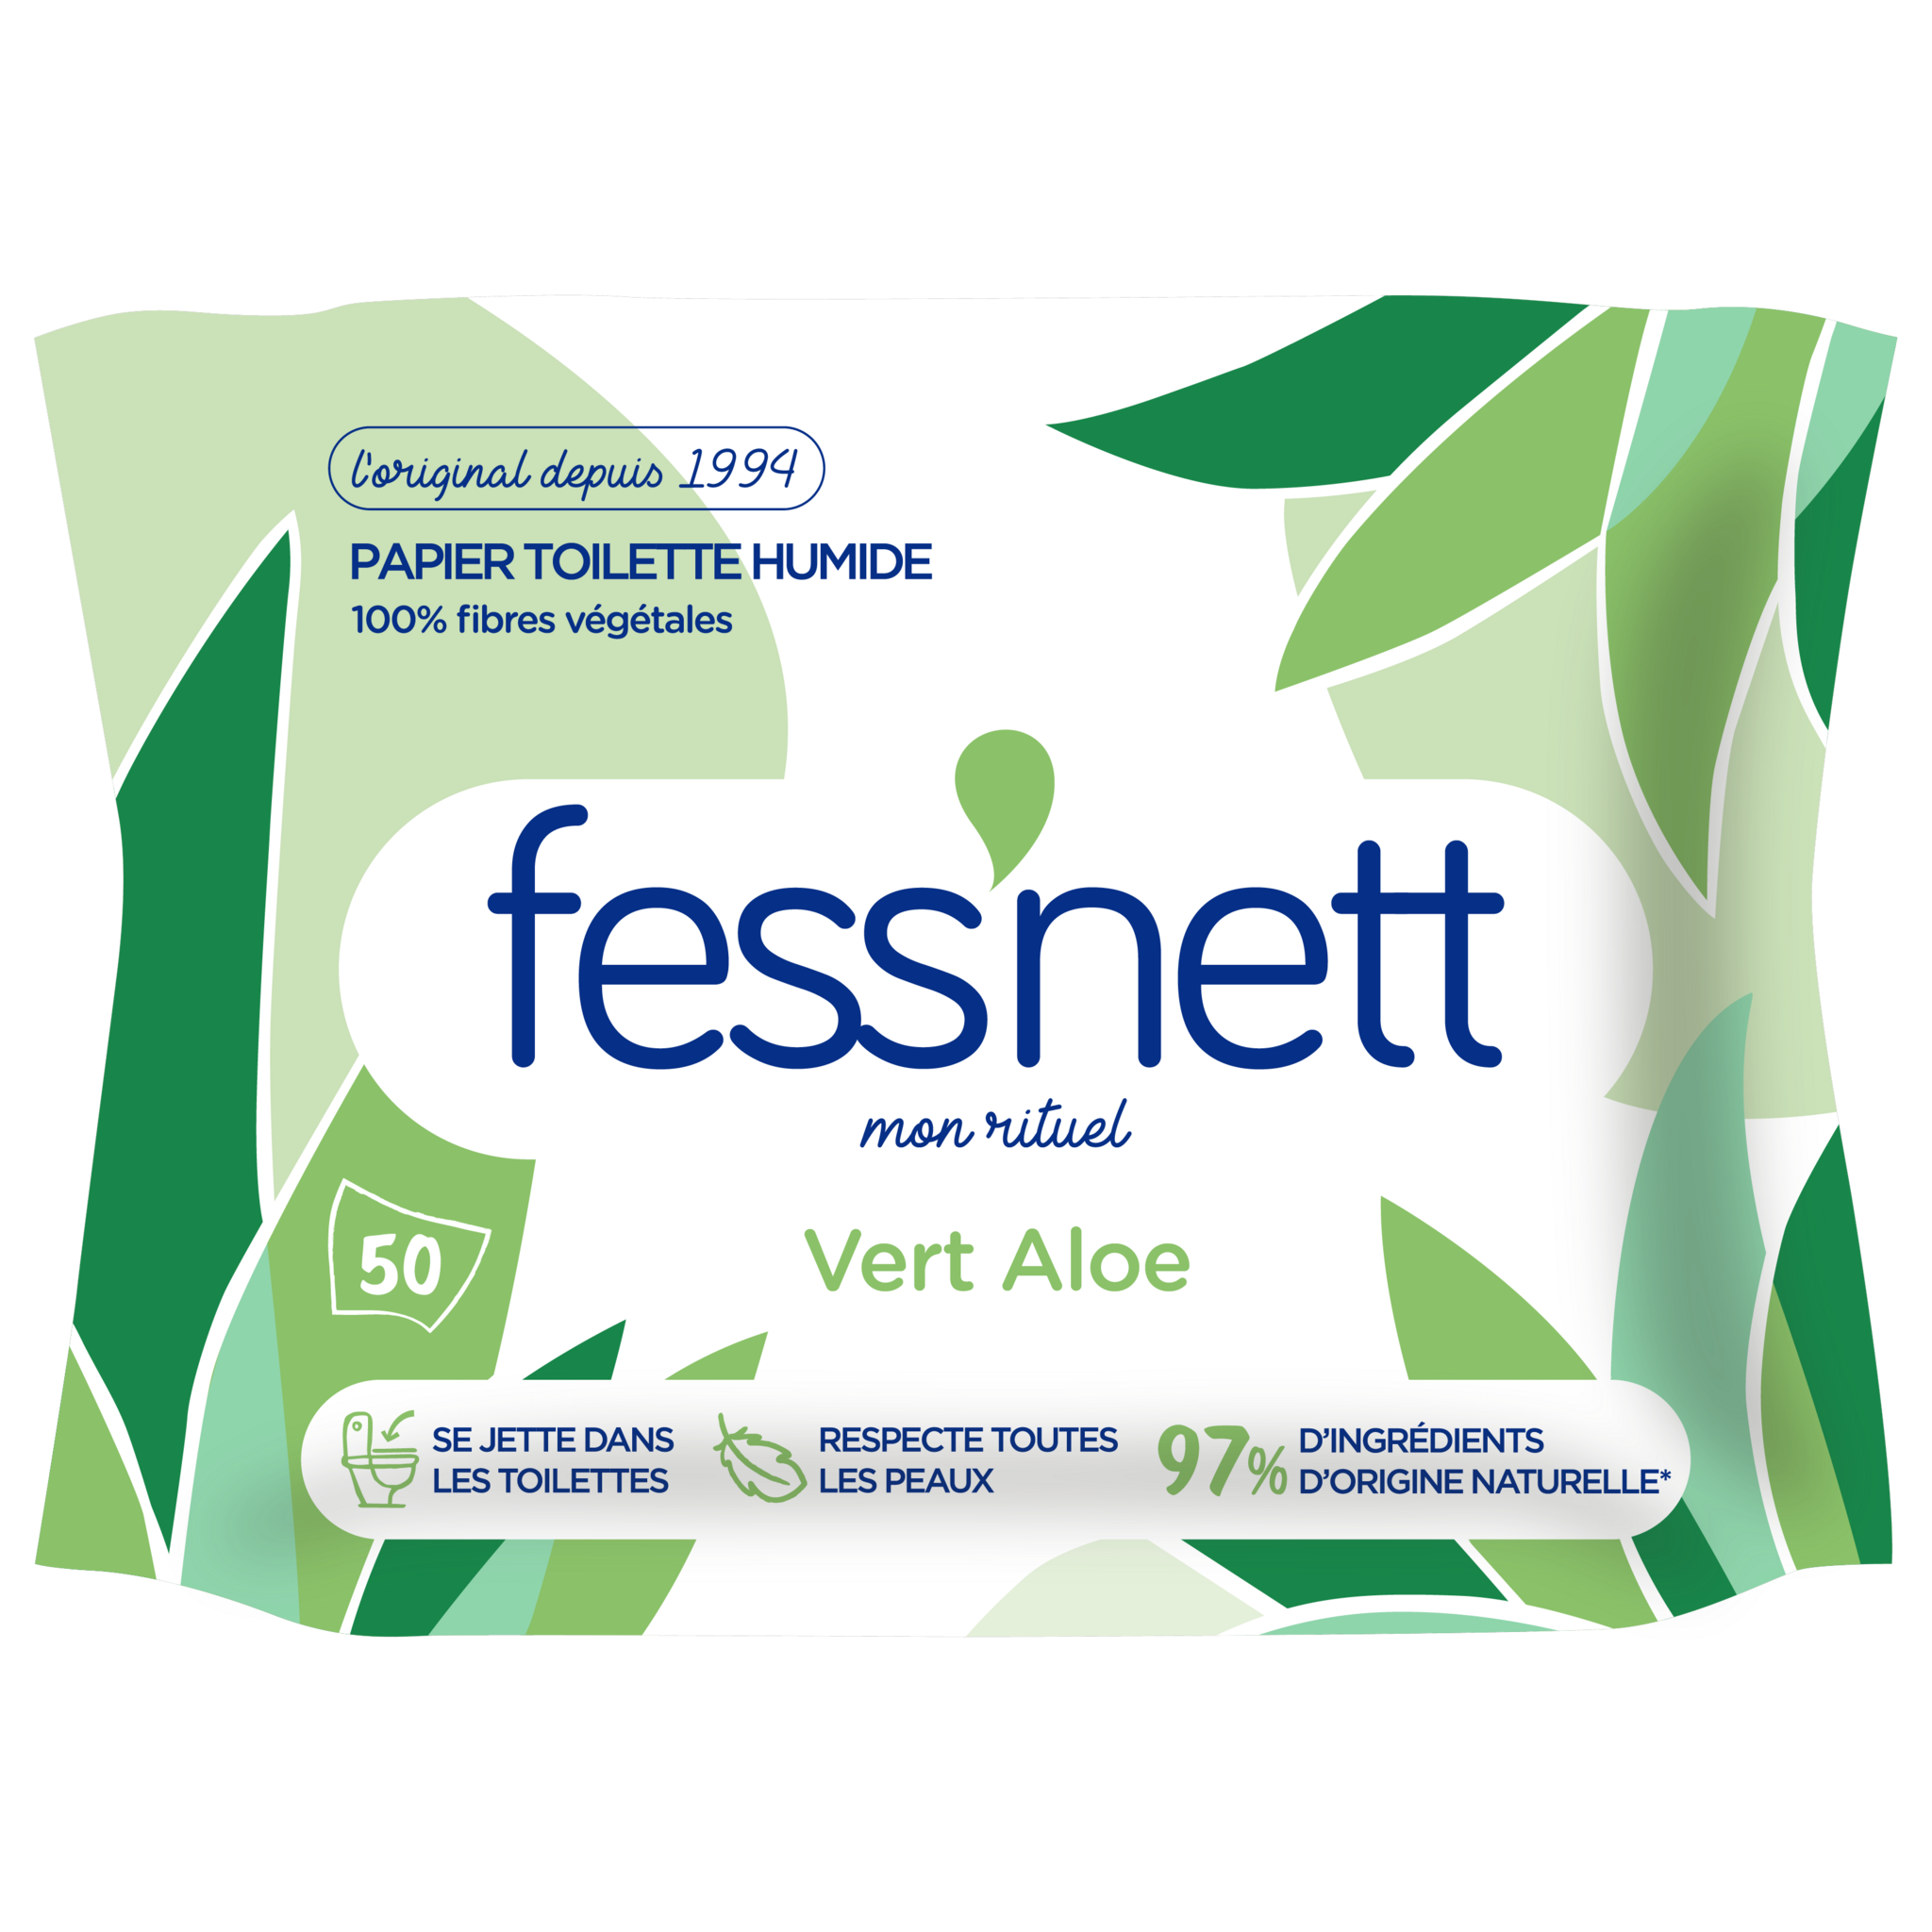 FESS'NETT Papier toilette humide blanc aloe vera 50 lingettes pas cher 